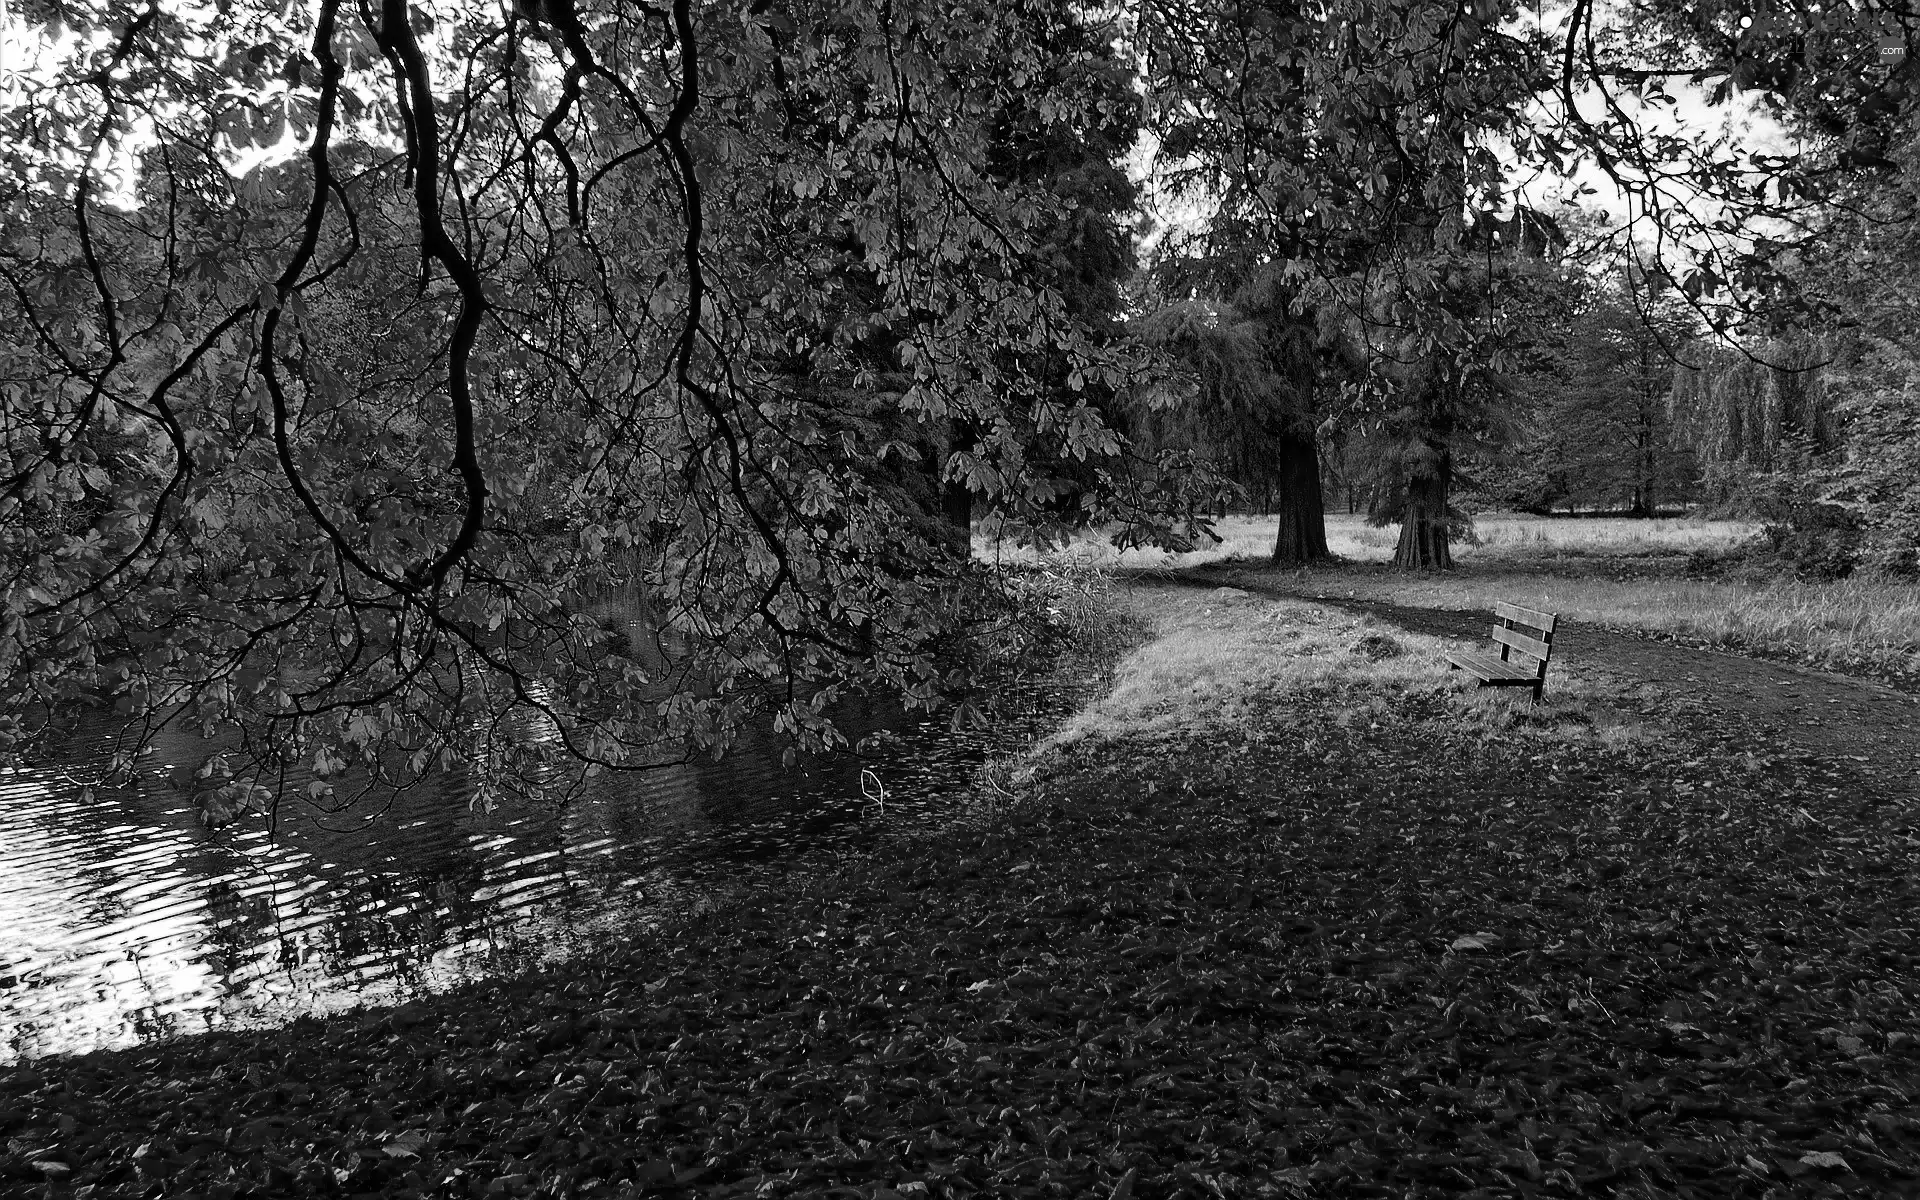 lane, Park, Leaf, autumn, Bench, River